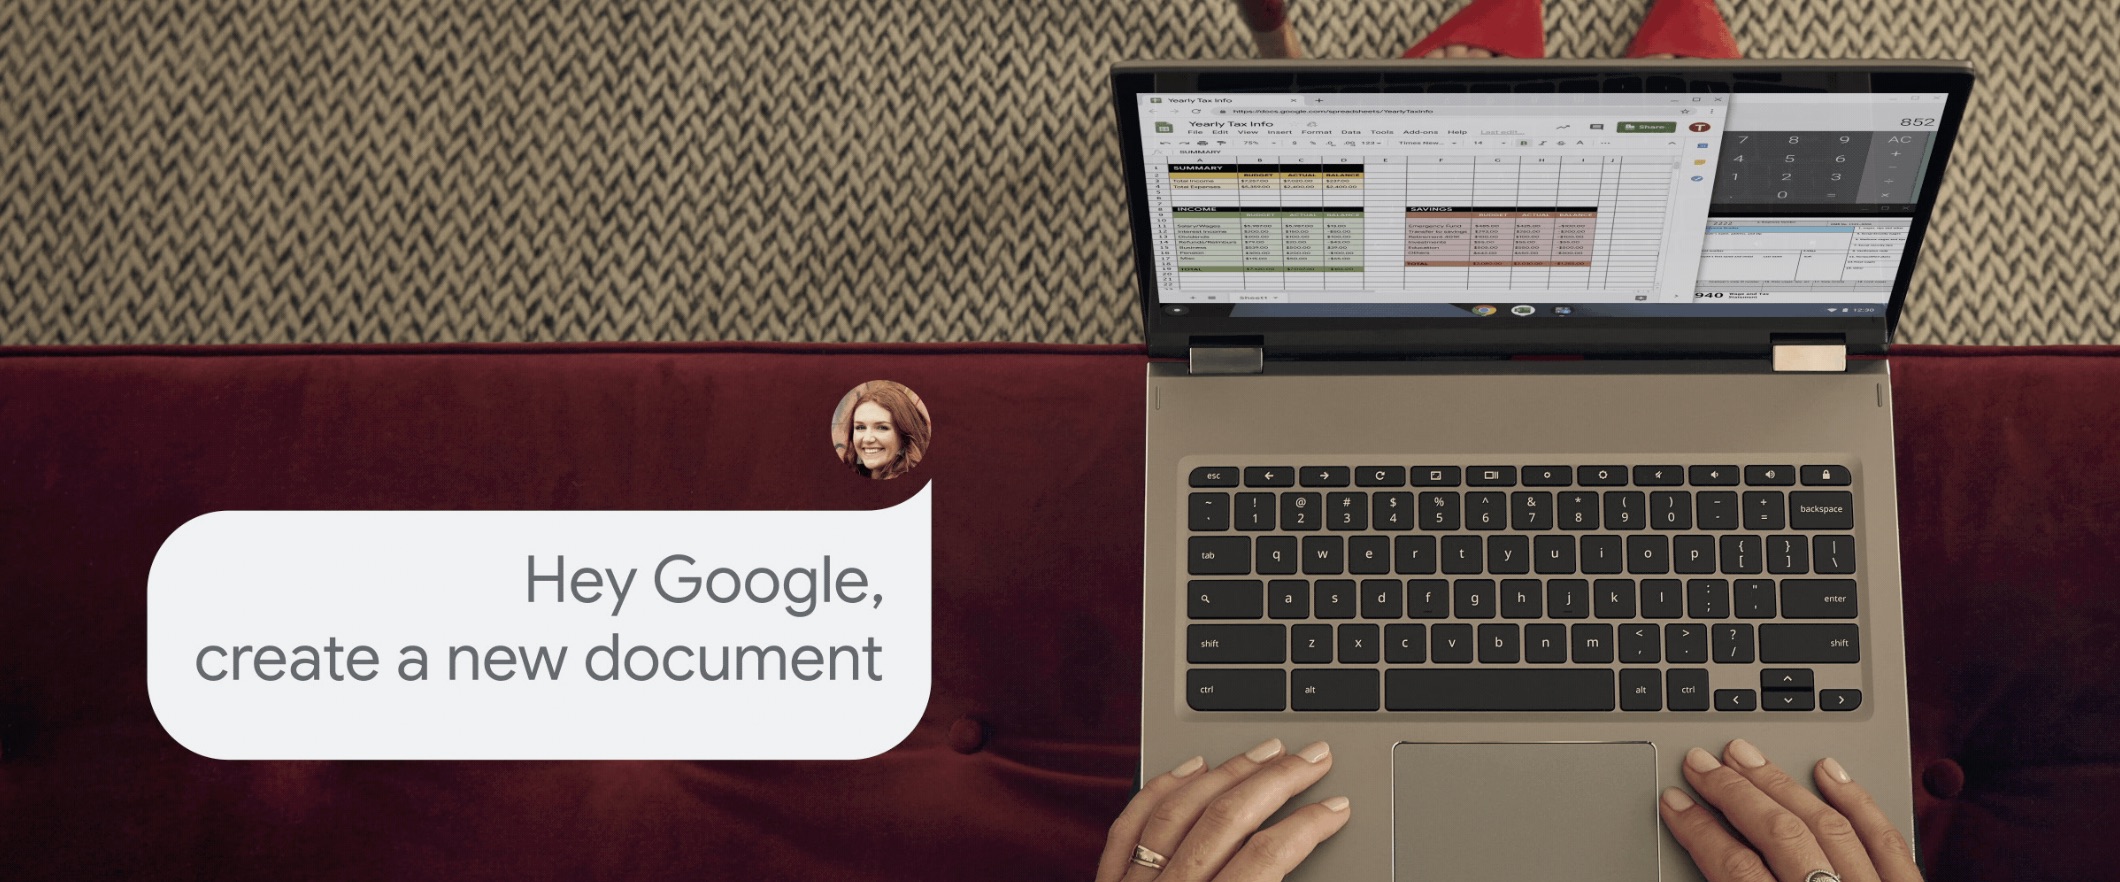 Google Assistant llegará a los Chromebooks